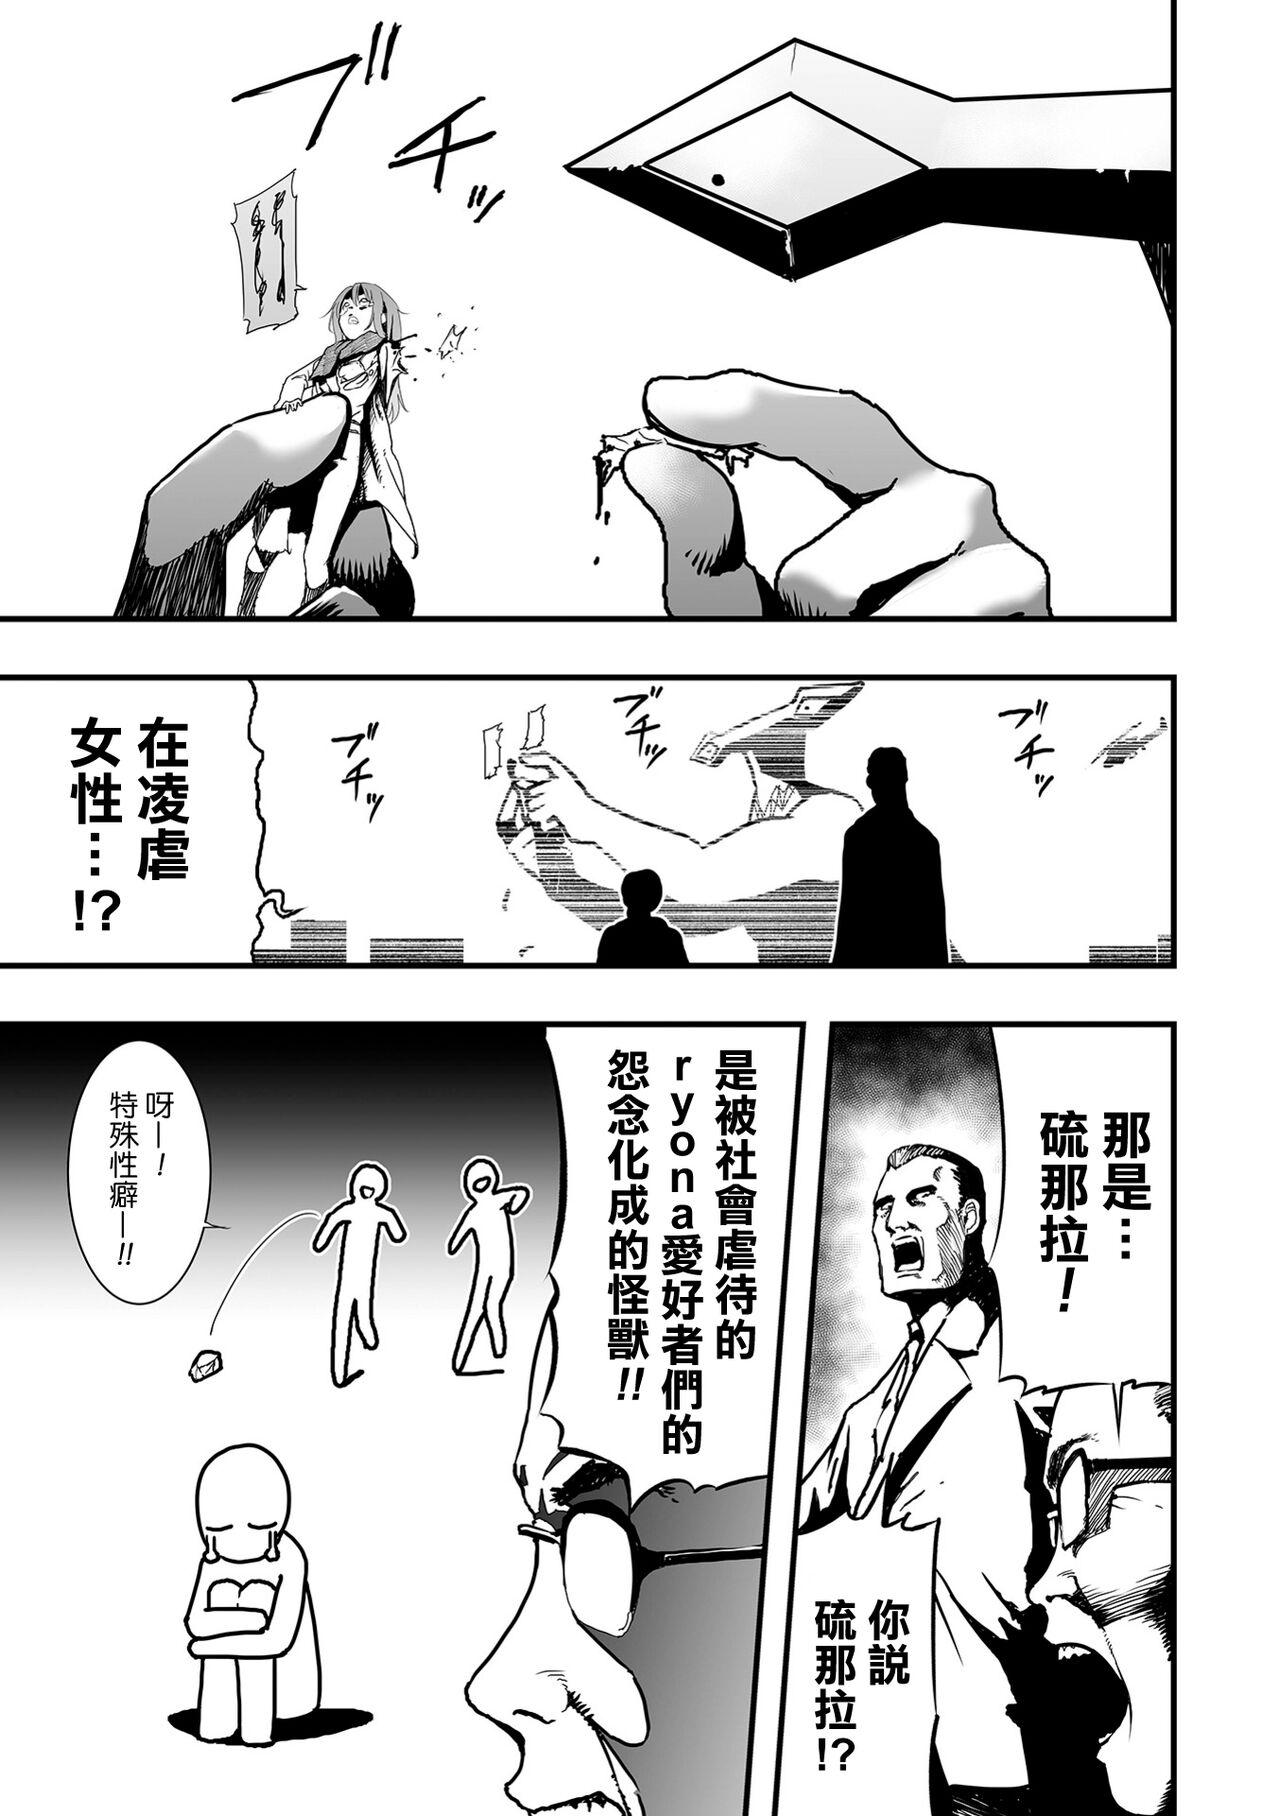 Peeing Tokushu Seiheki Dai Kaijuu Manga RyonaLa | 特殊性癖大怪獸漫畫硫那拉 Ano - Page 4